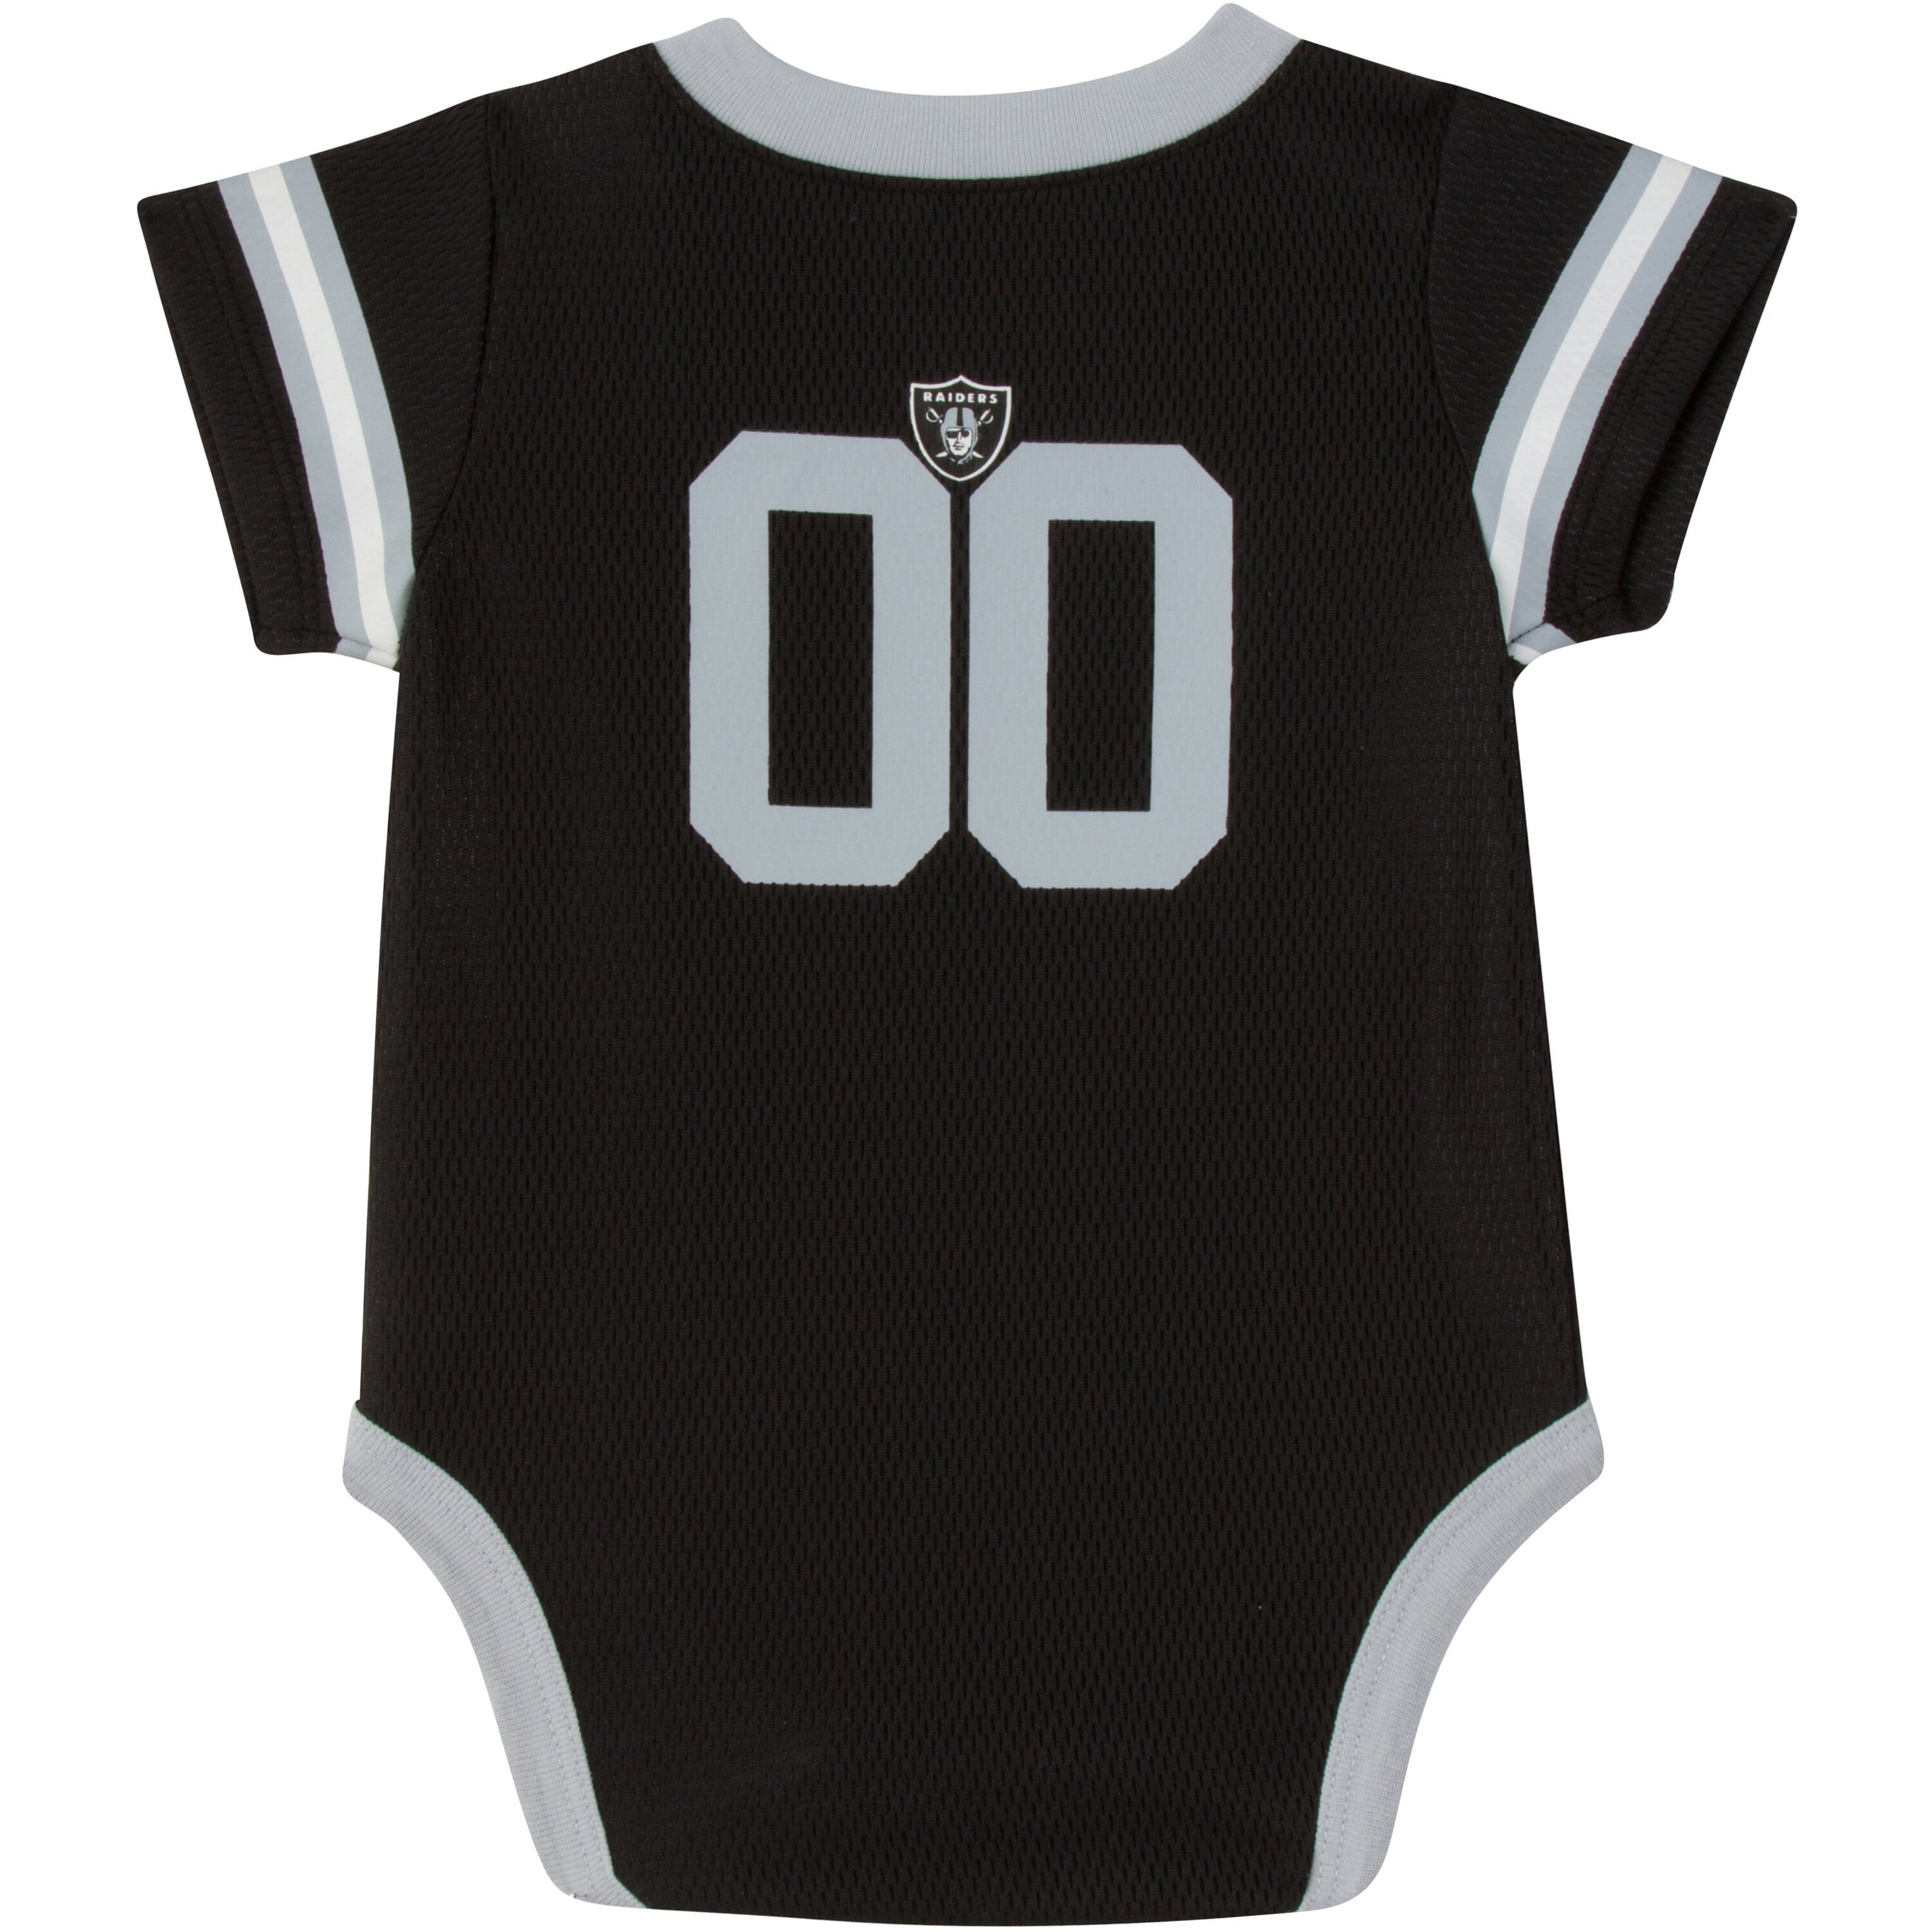 oakland raiders baby jersey